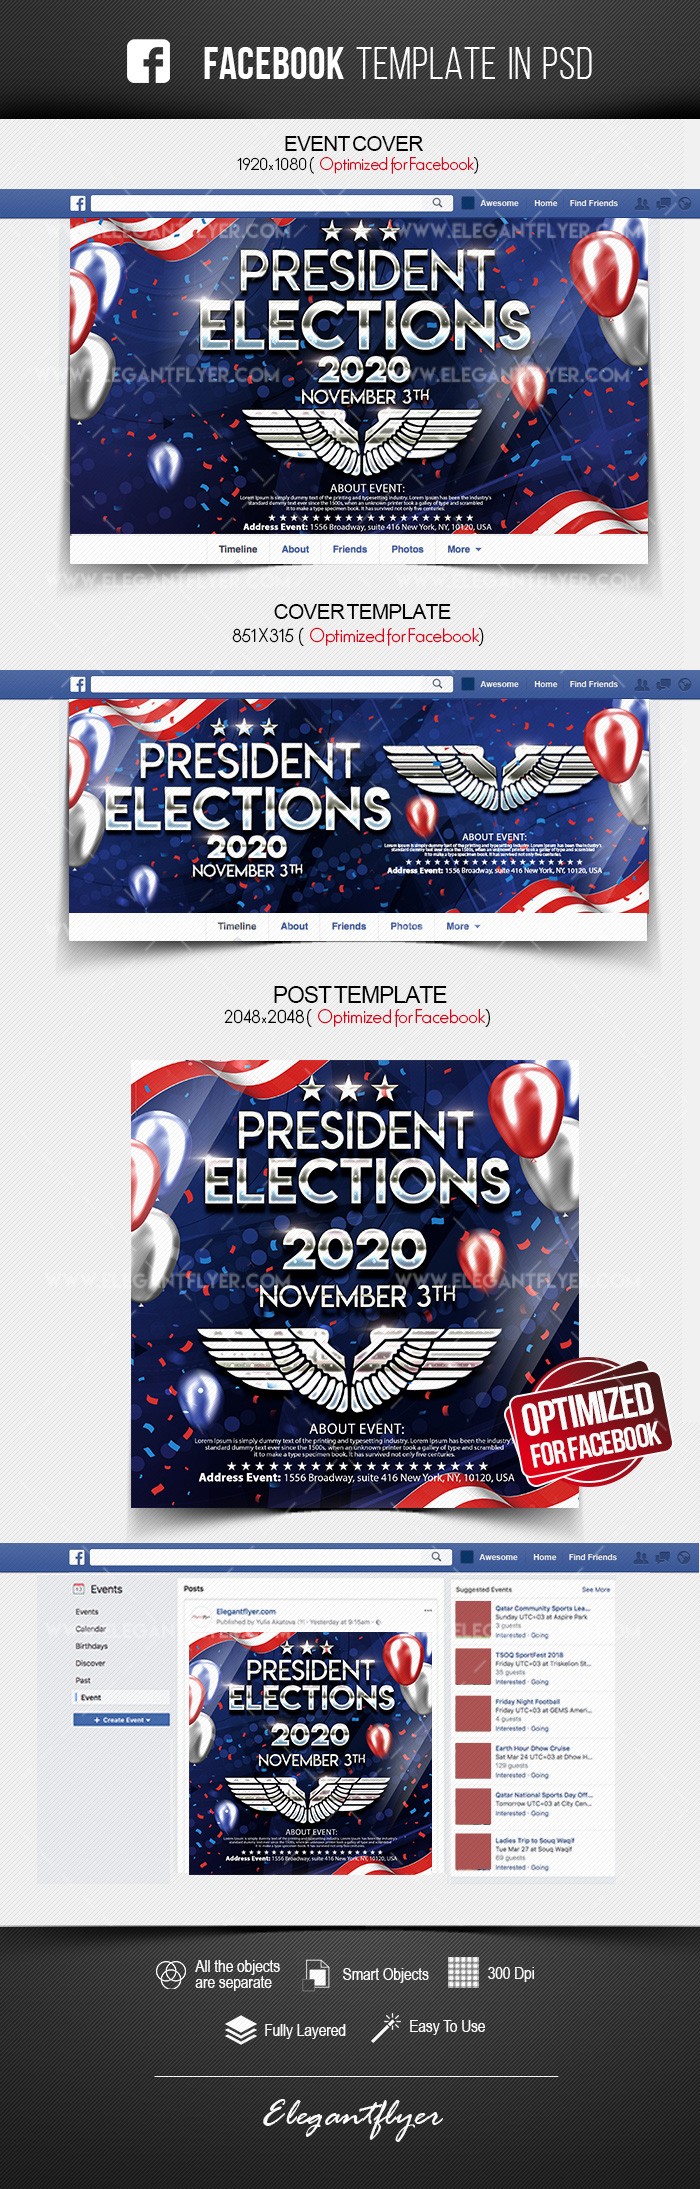 President Elections Facebook by ElegantFlyer